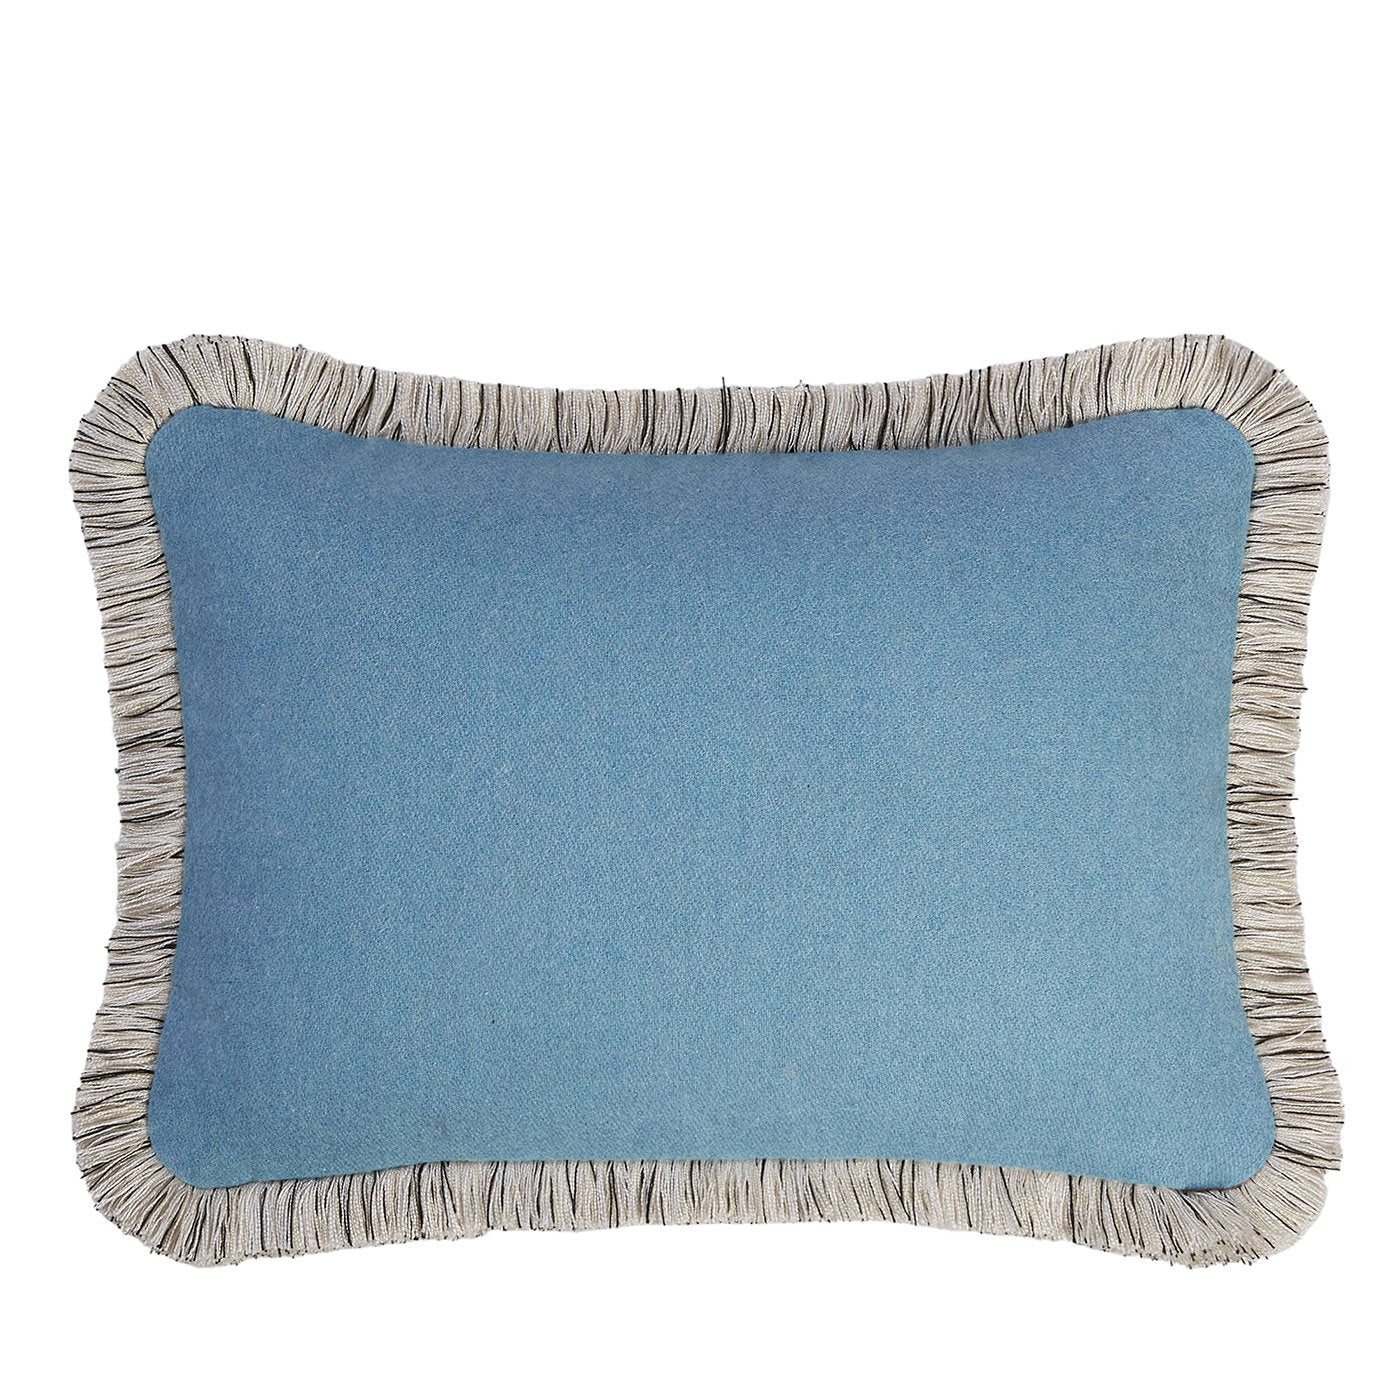 Artic Teal Rectangular Cushion Limited Edition  - Main view